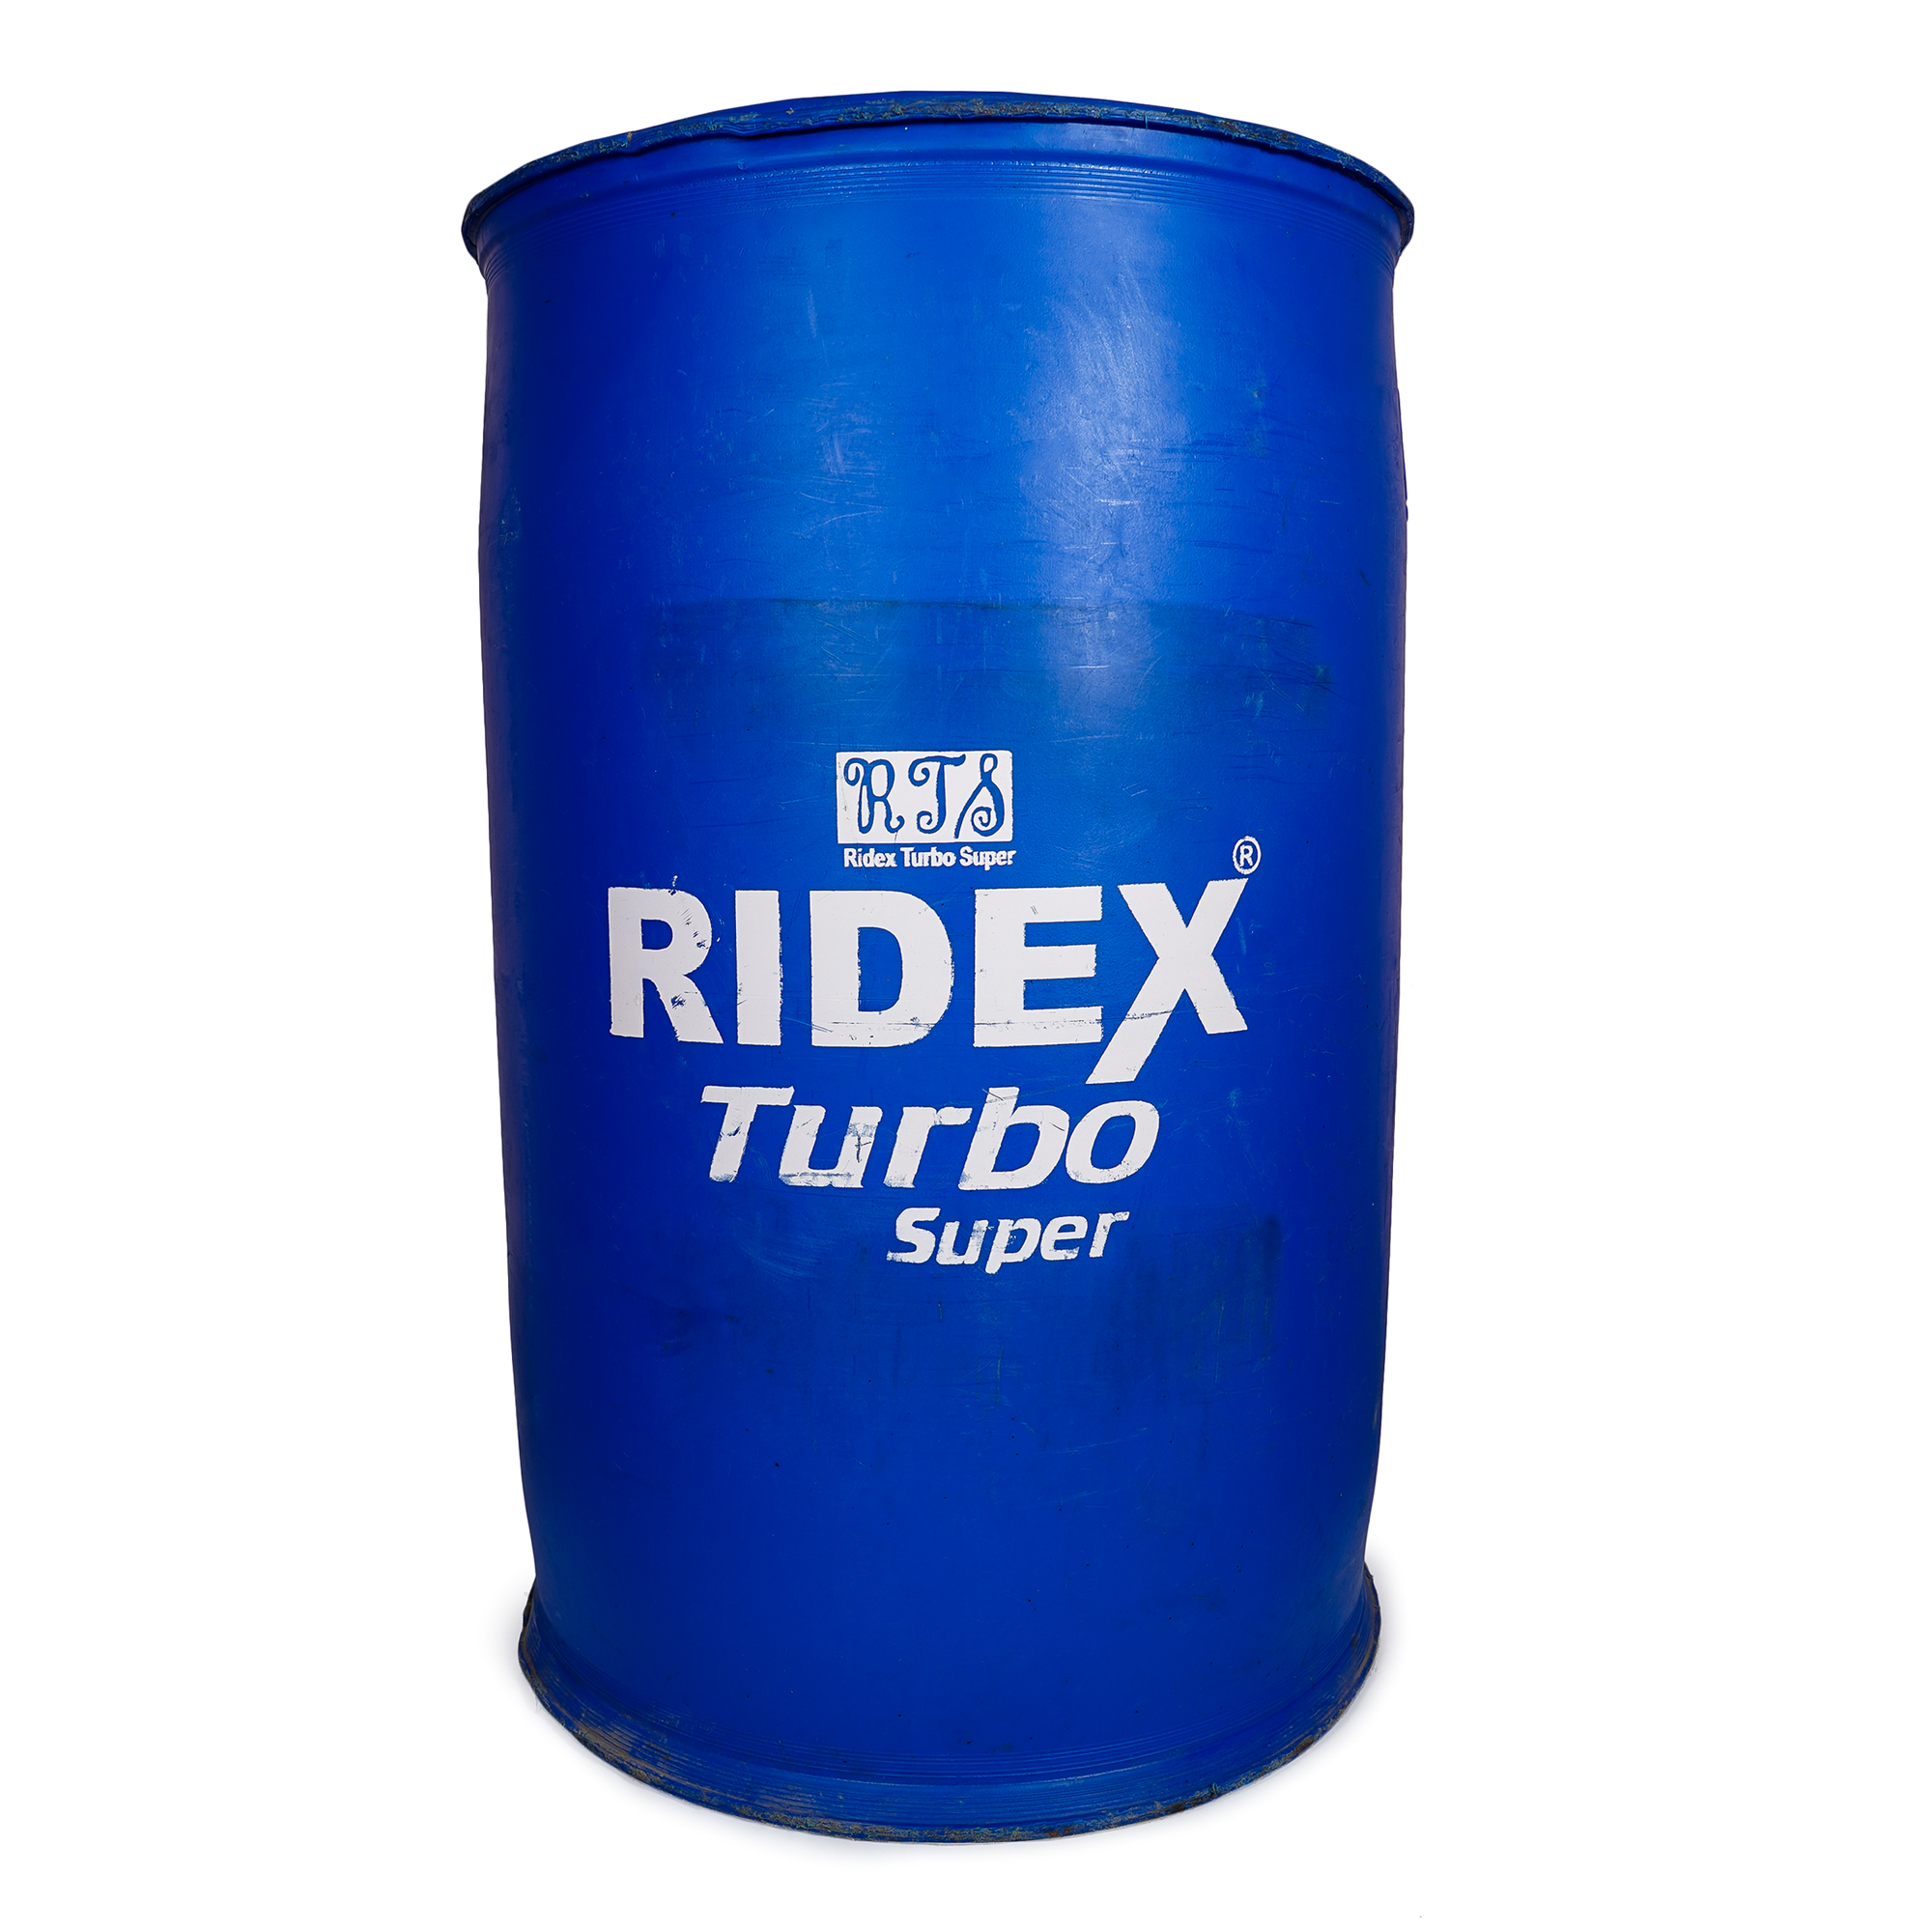 RIDEX TURBO SUPER MULTI PURPOSE BERREL 210 LTR